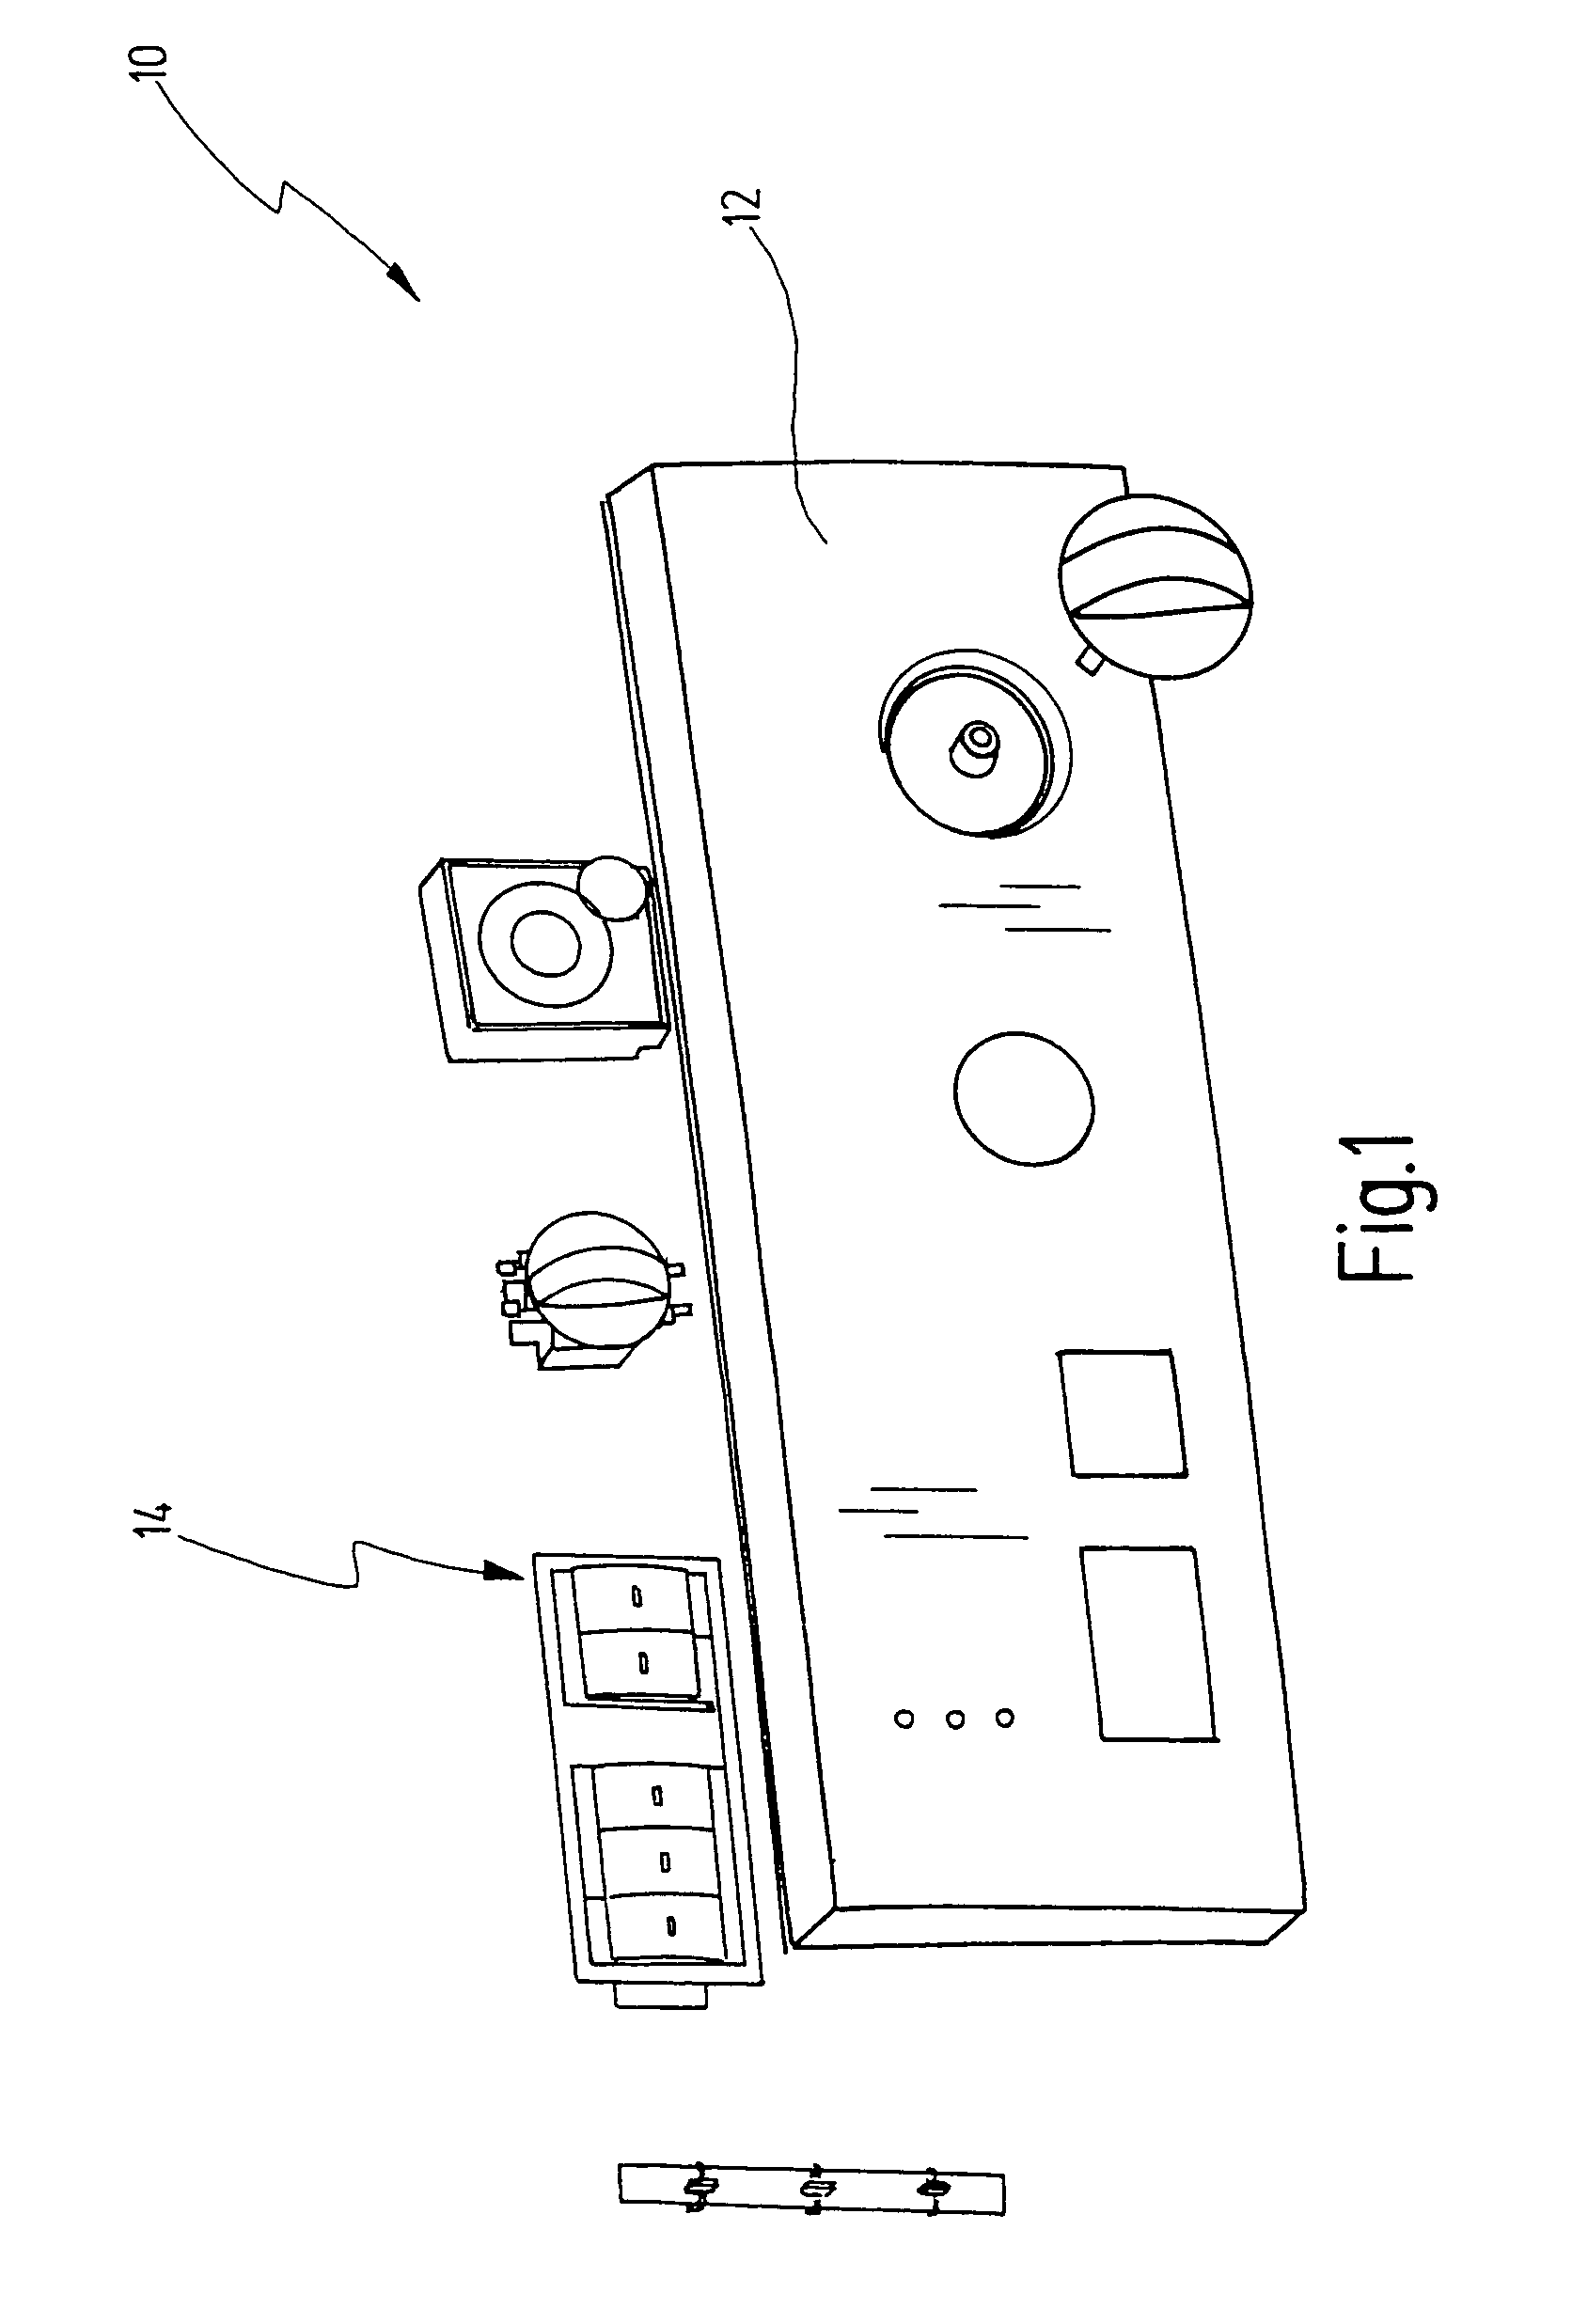 Key arrangement for a control panel